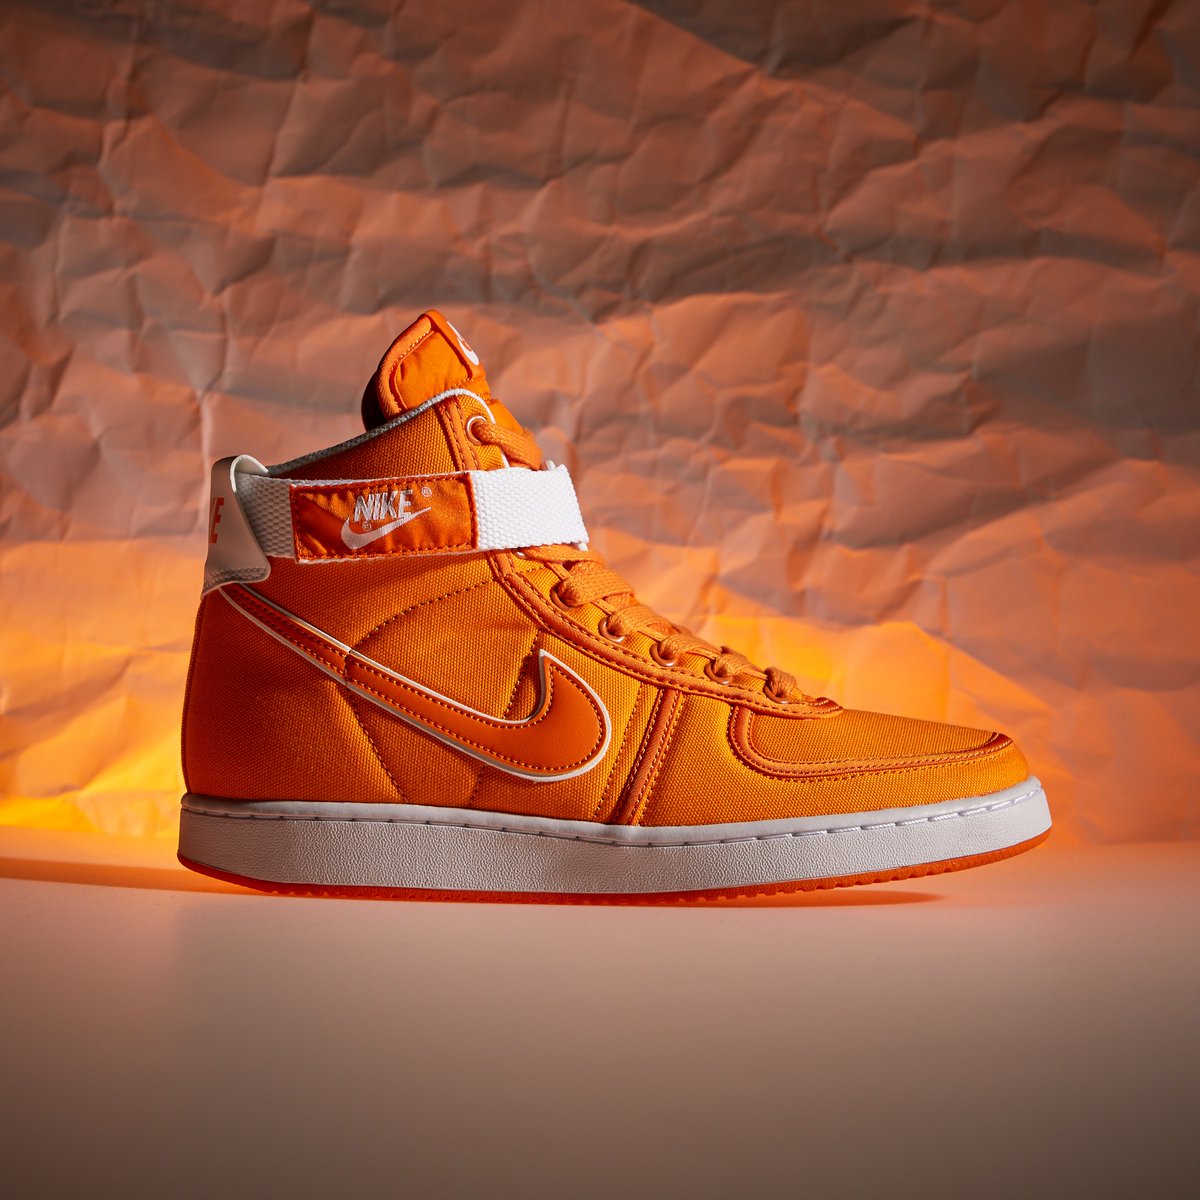 Doc Brown's Nike Vandal High Supreme is 